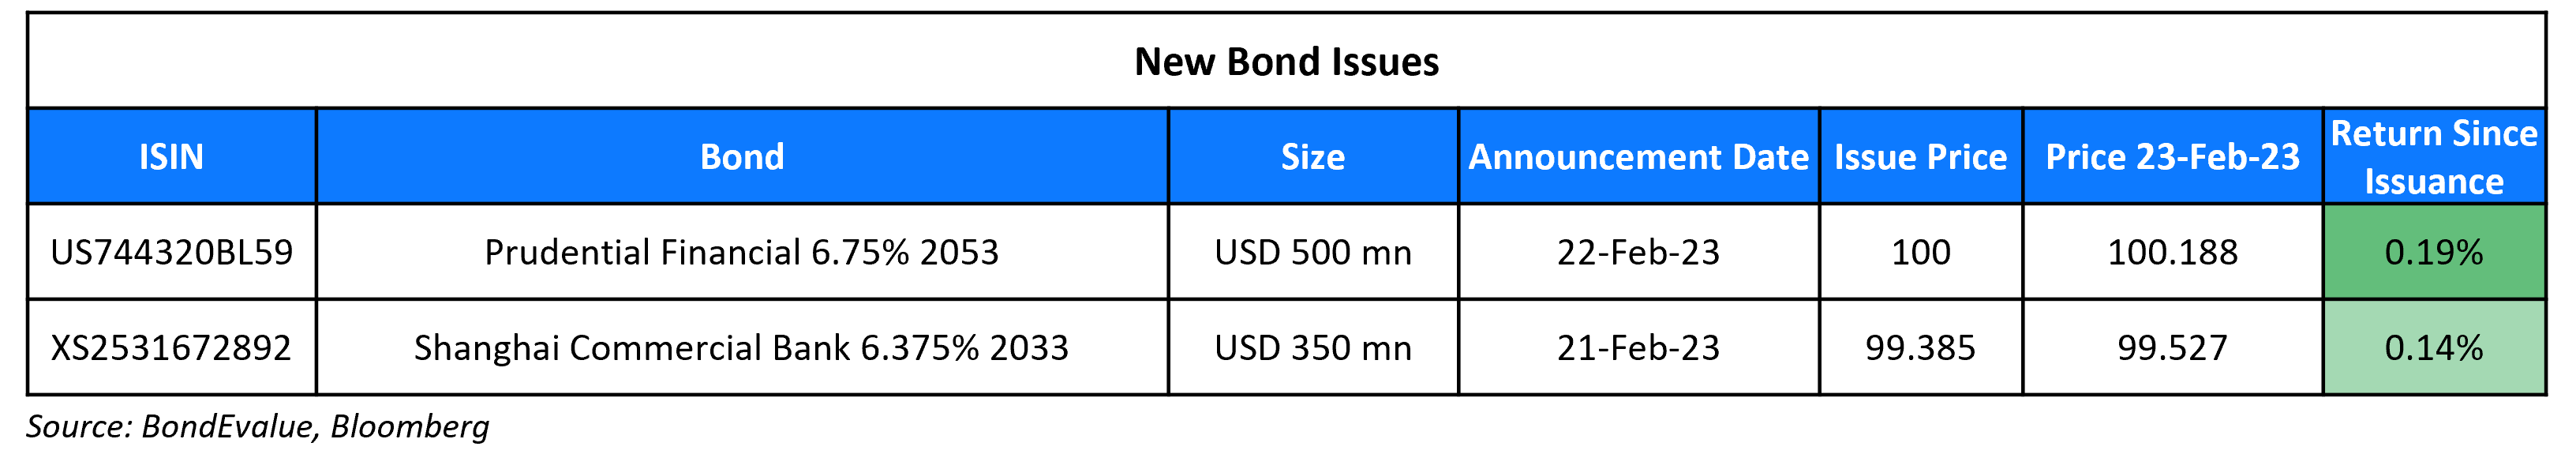 New Bond Issues 23 Feb 23 (2)-1